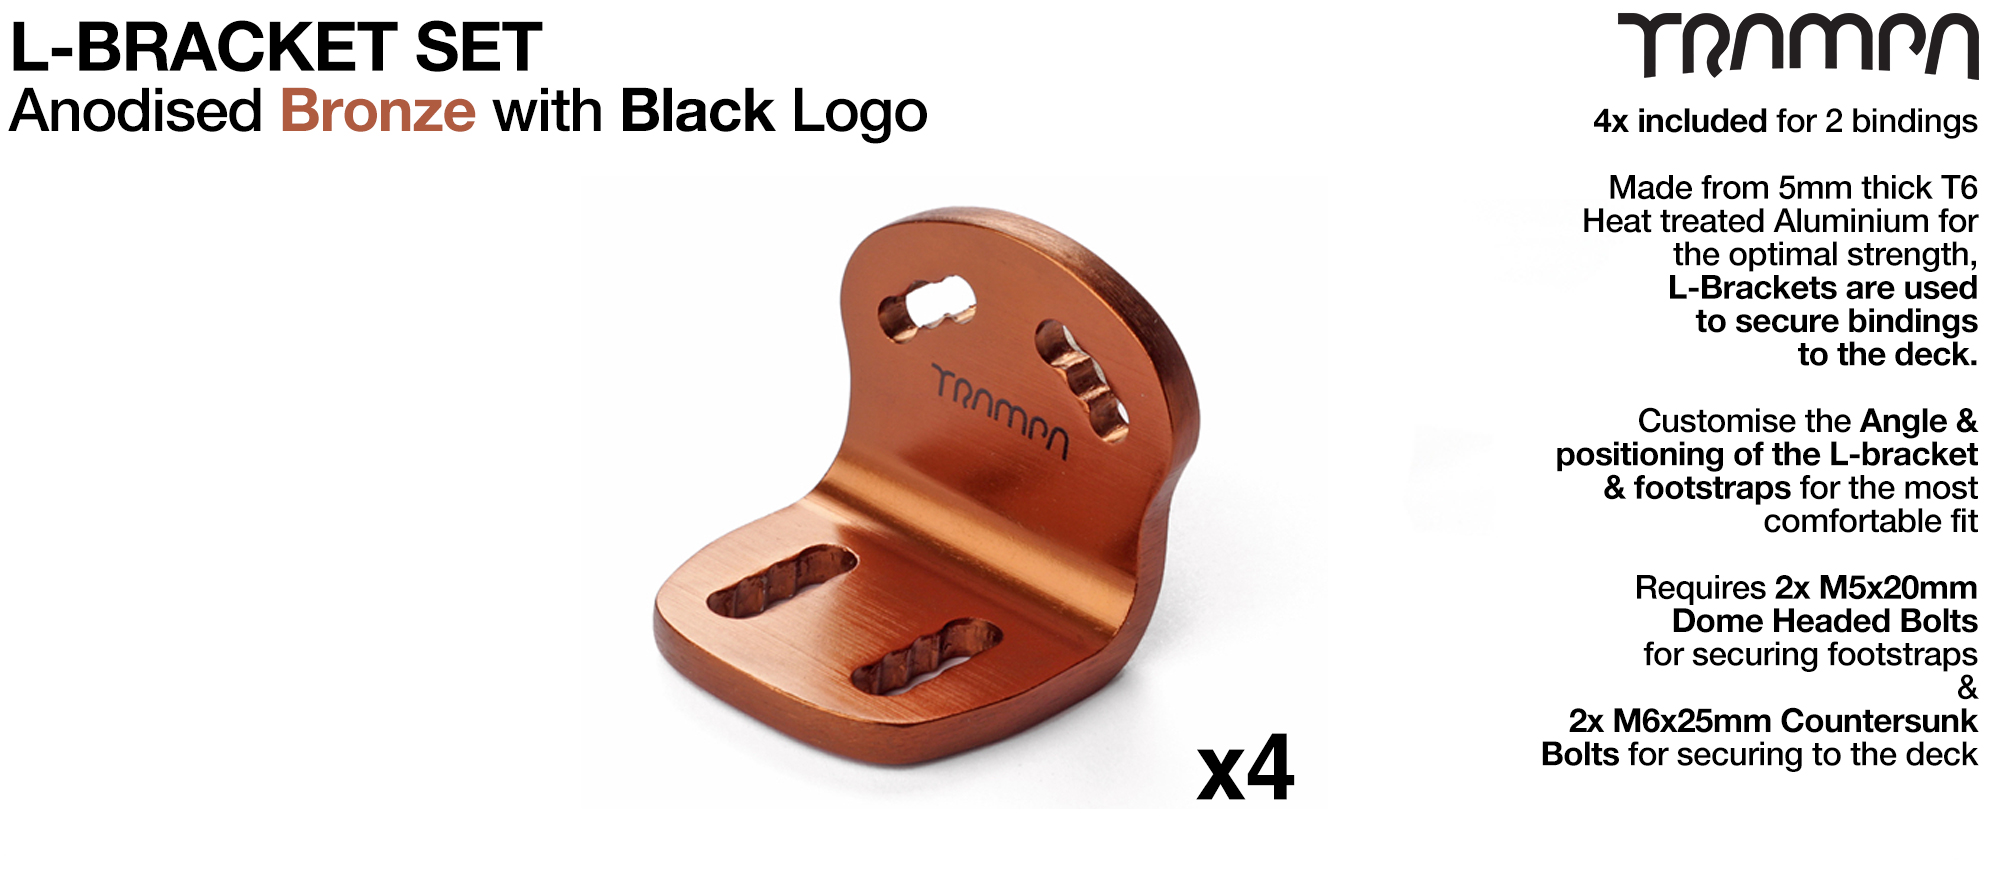 L Bracket - Anodised BRONZE with BLACK logo x 4